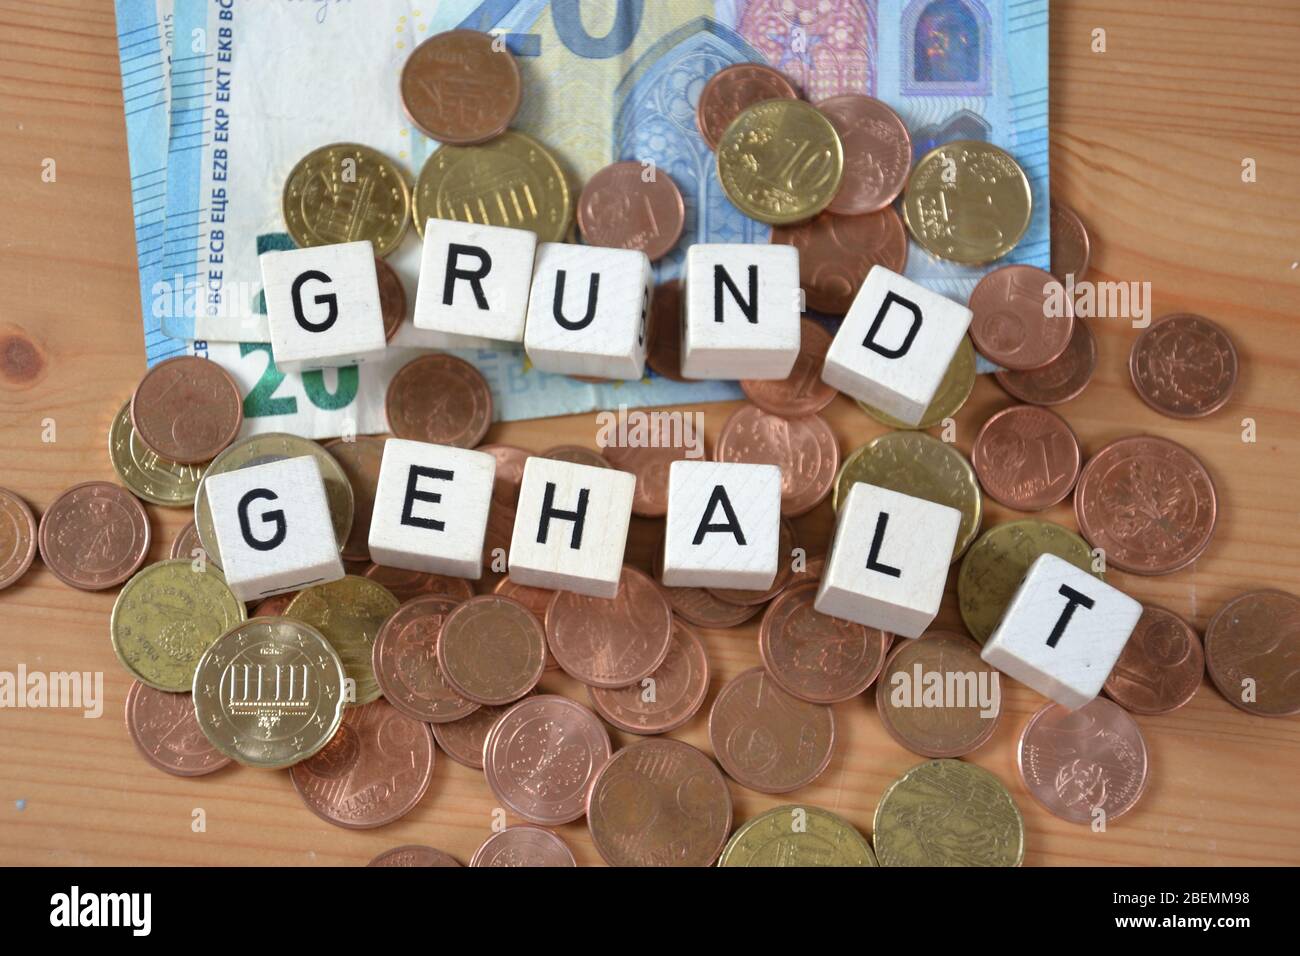 Gehalt ( german word for basic salary ) Stock Photo